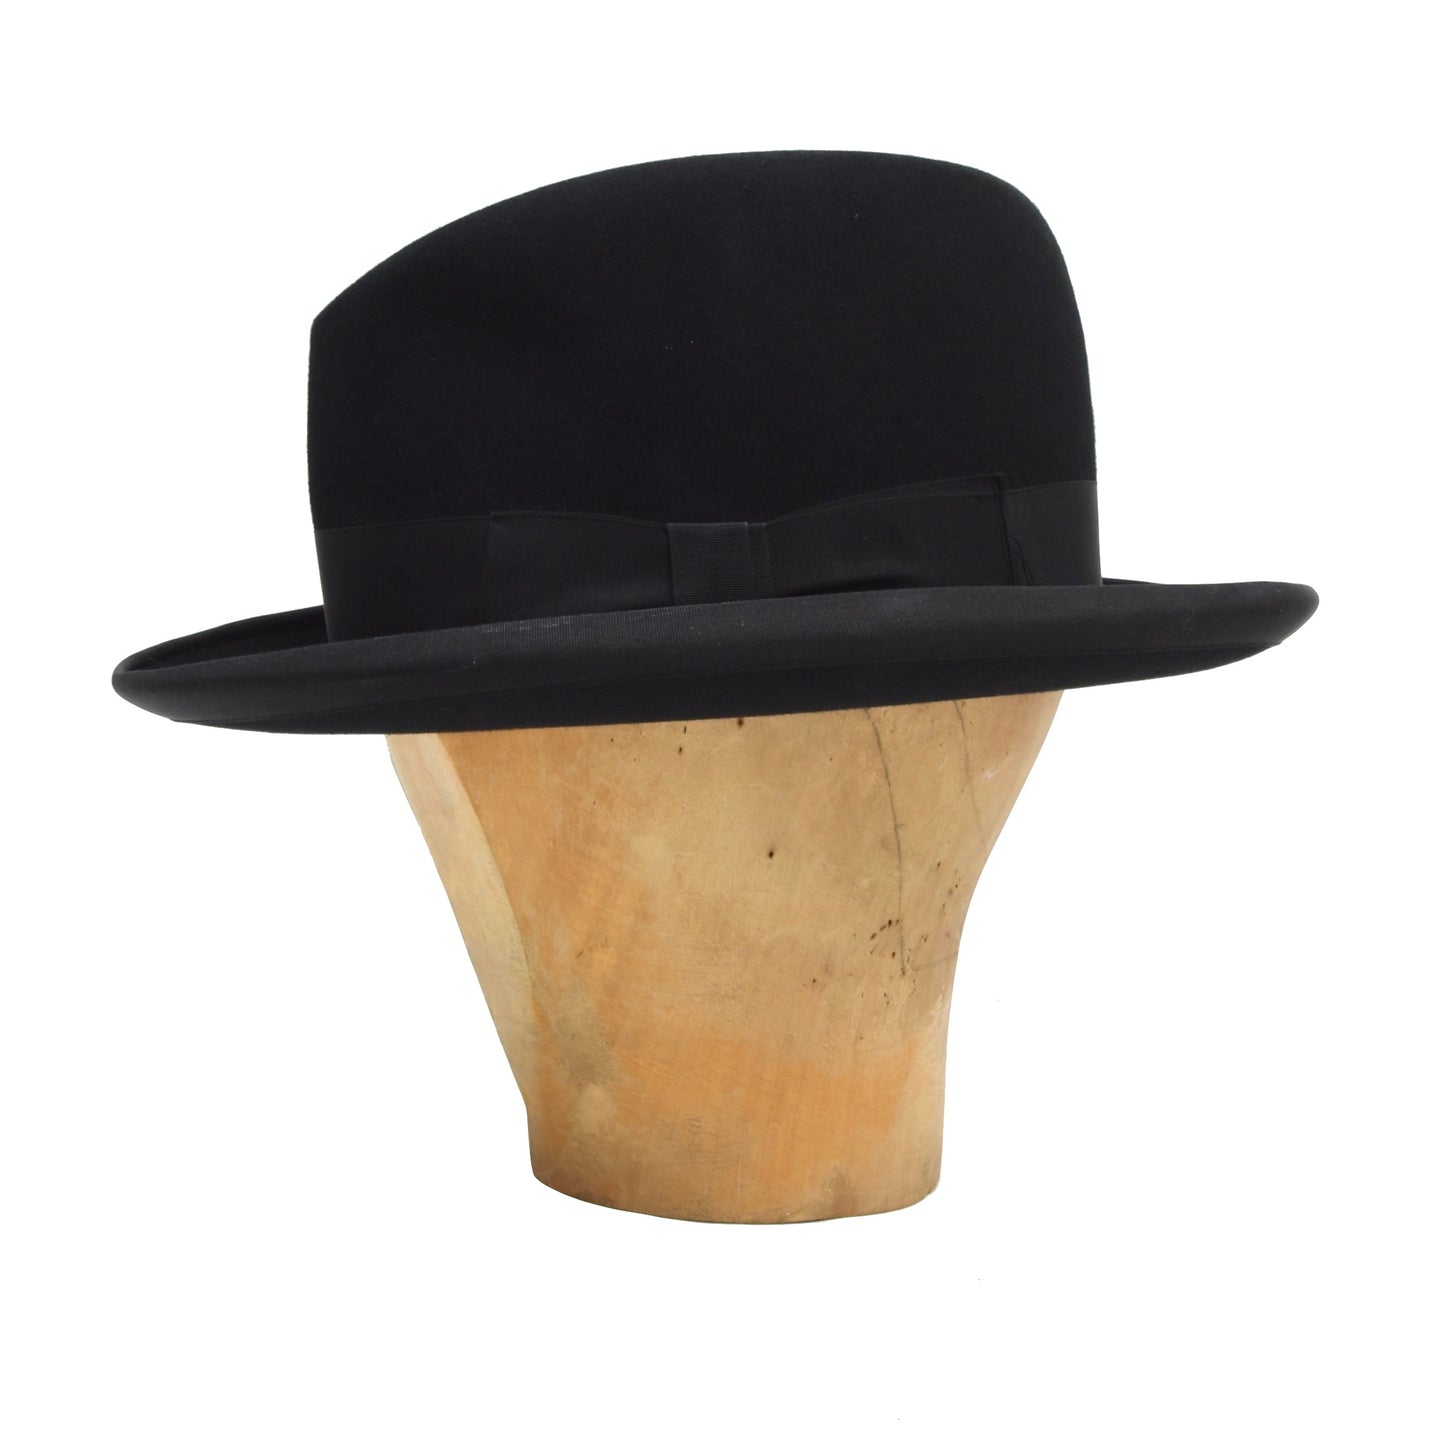 P&C Habig Wien Homburg Fur Felt Hat Size 58 - Black